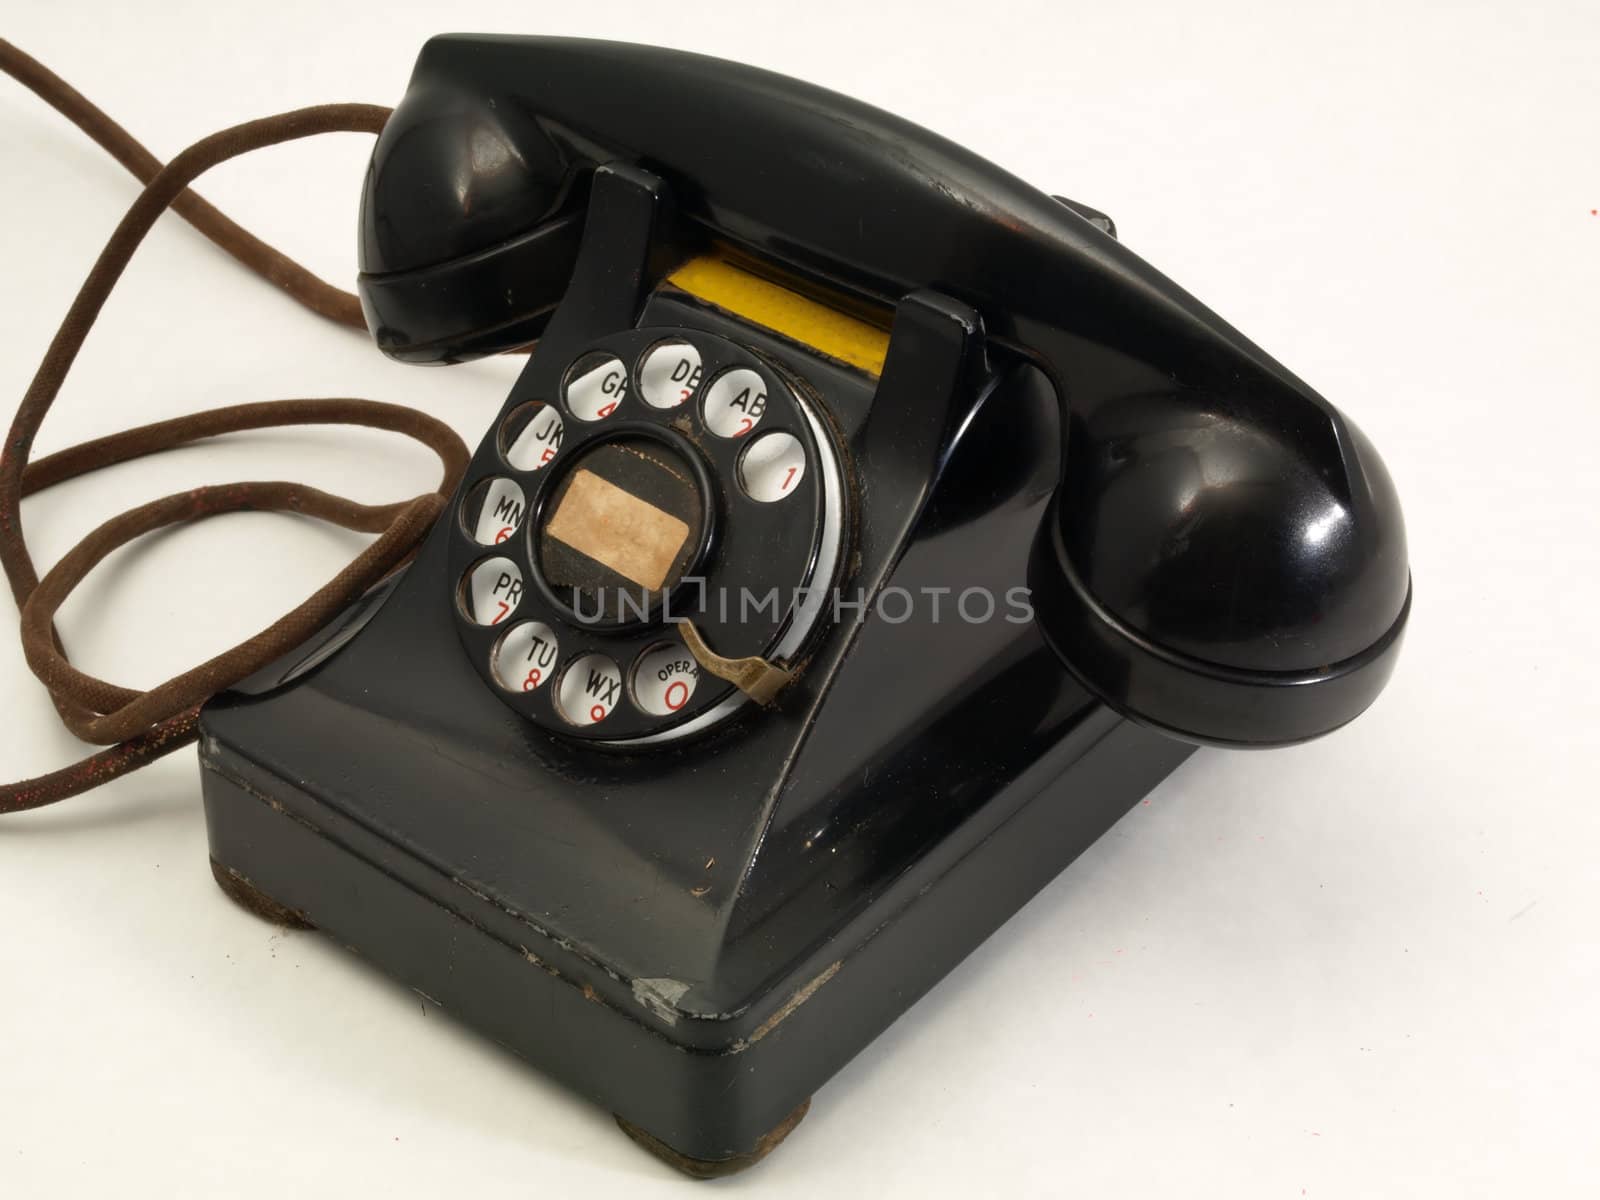 Old Retro Telephone by RGebbiePhoto